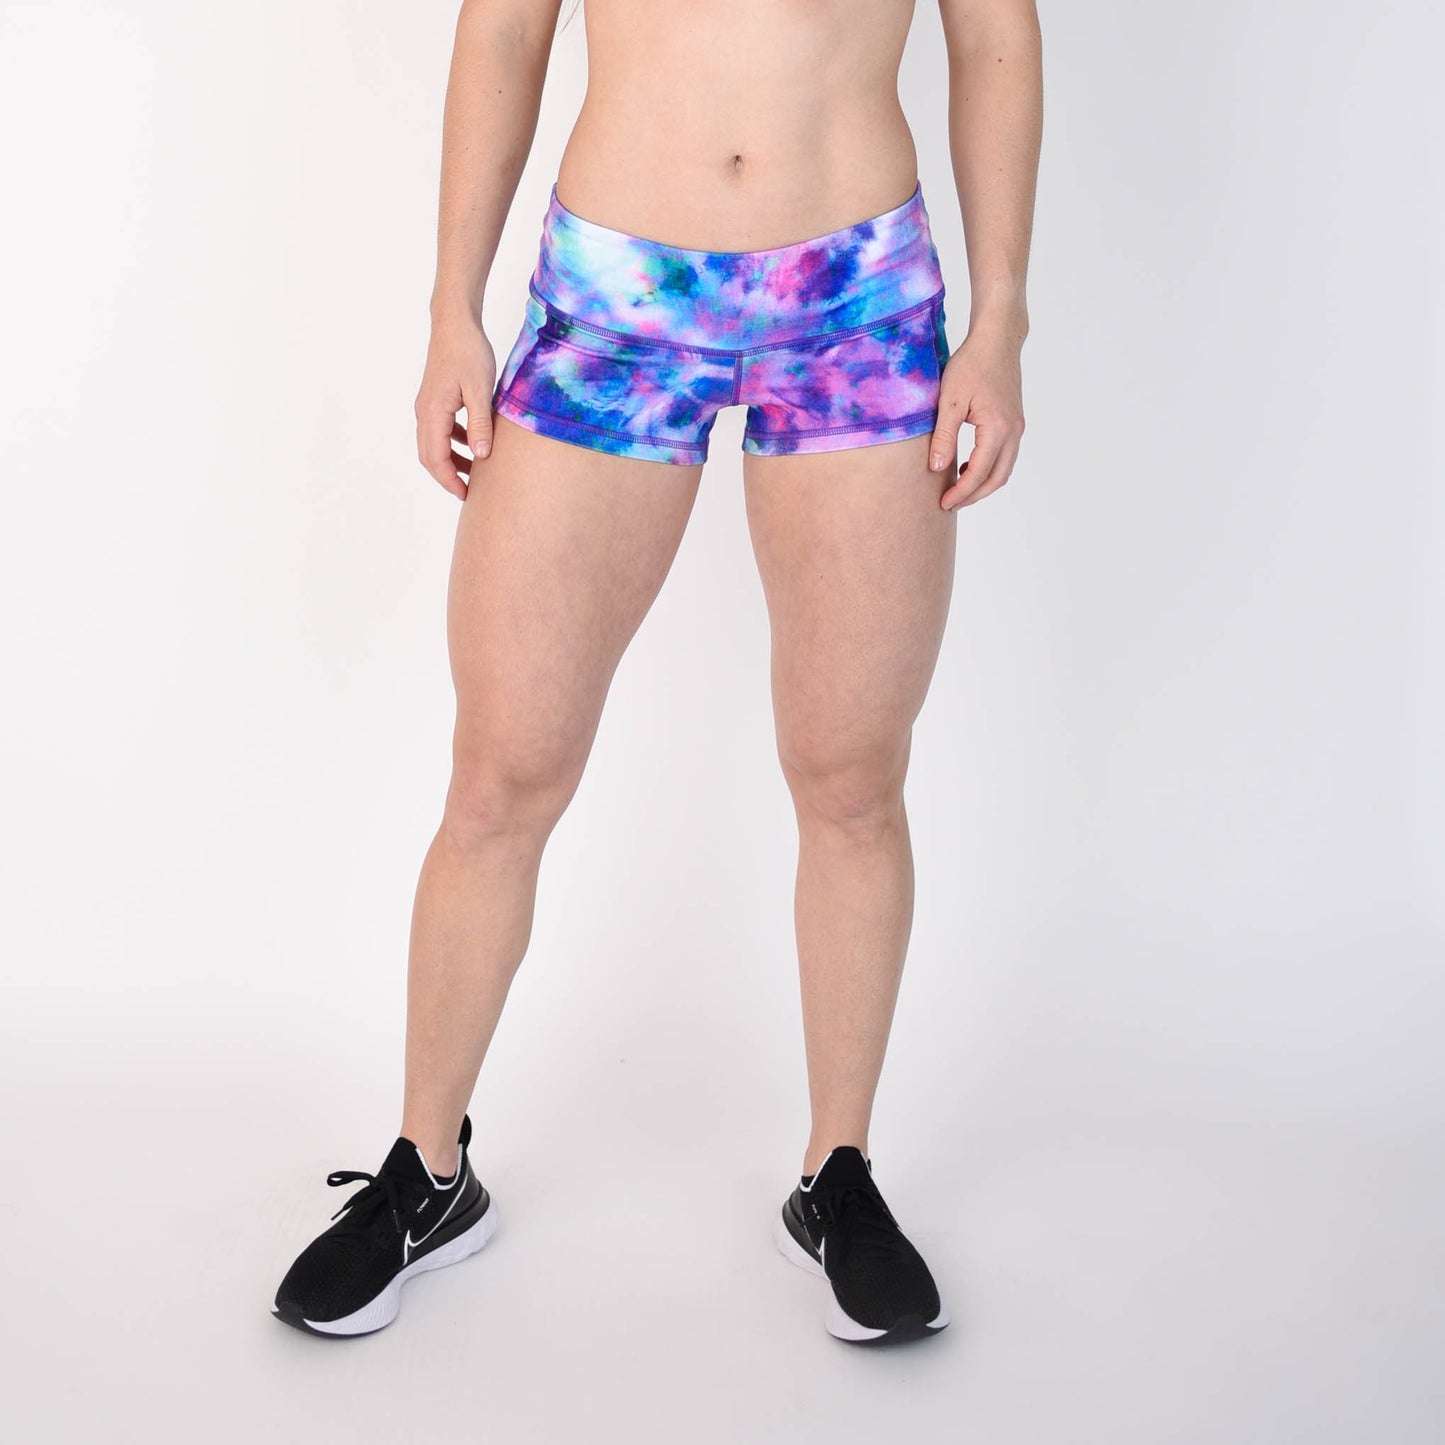 FLEO Shimmy Shimmer Shorts (Low-rise Contour) - PRE-ORDER - 9 for 9